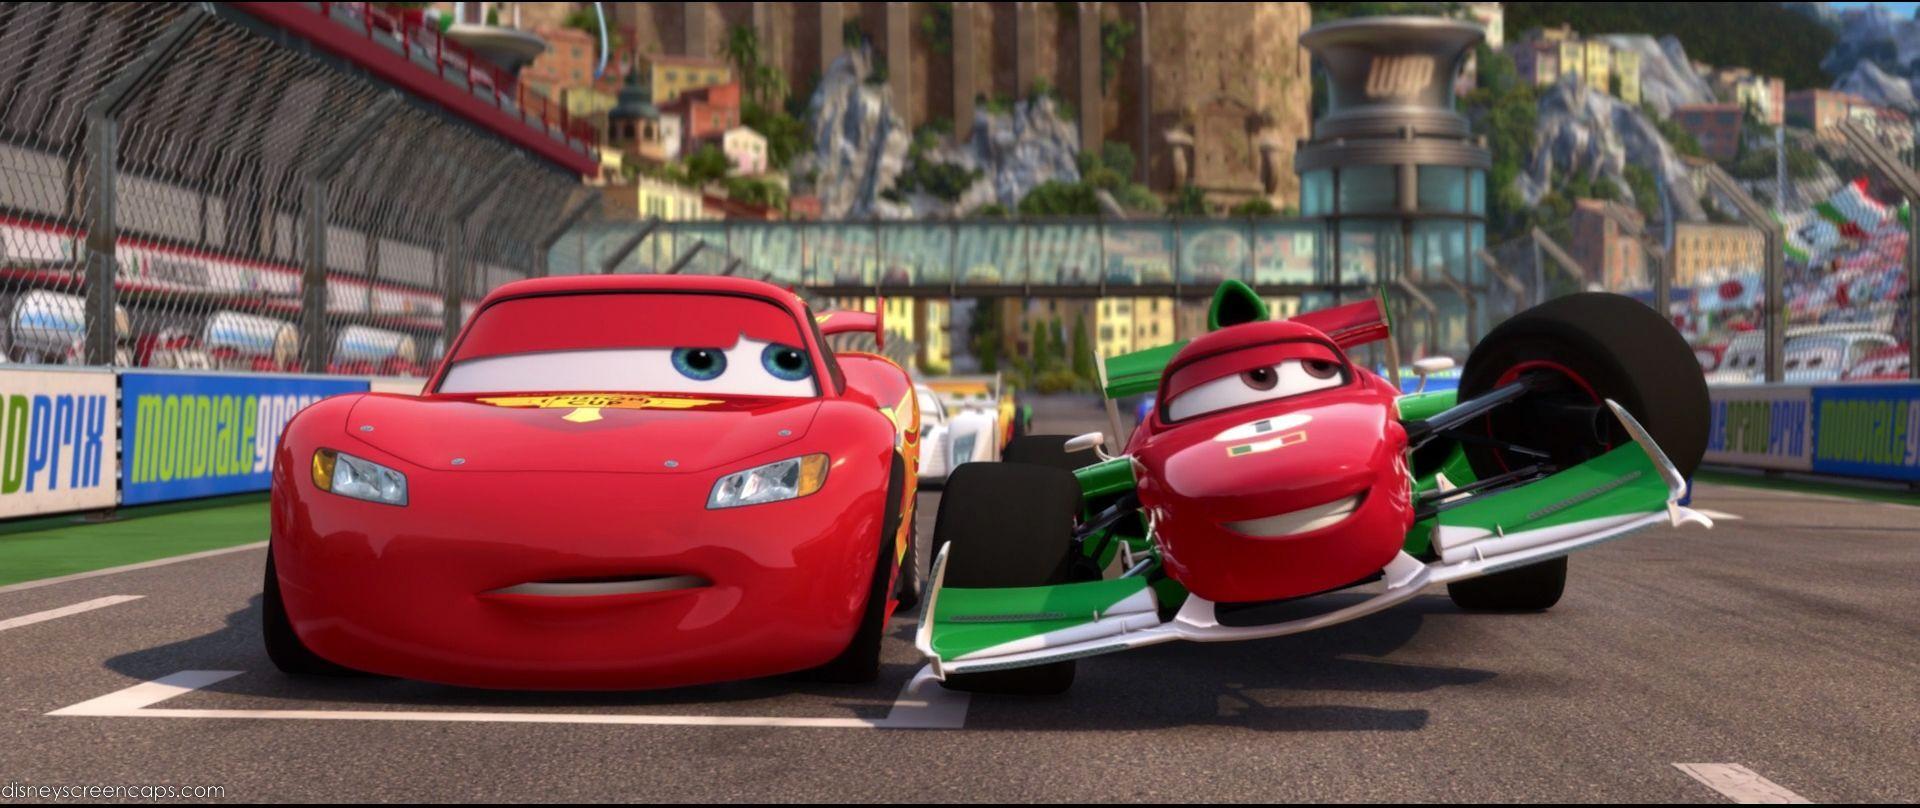 Ka Ciao Italy Disney Pixar Cars 2 HD Wallpaper Image for Lumia